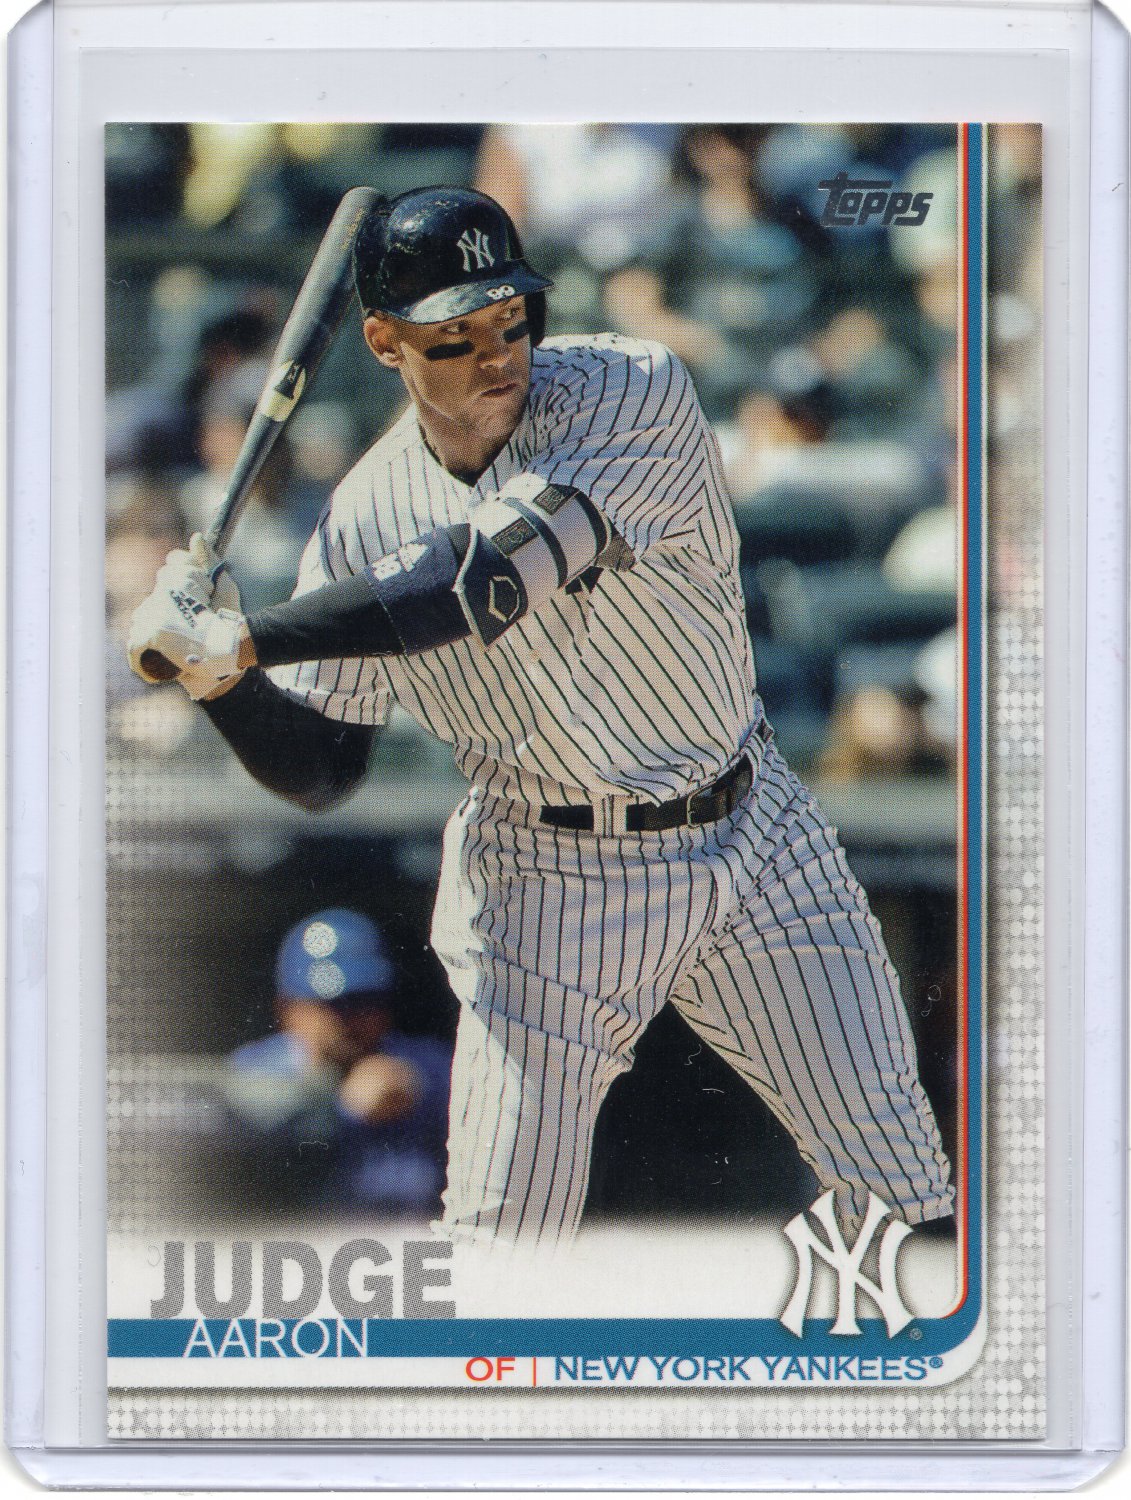 Aaron Judge 2019 Topps Series 1 card #150 New York Yankees